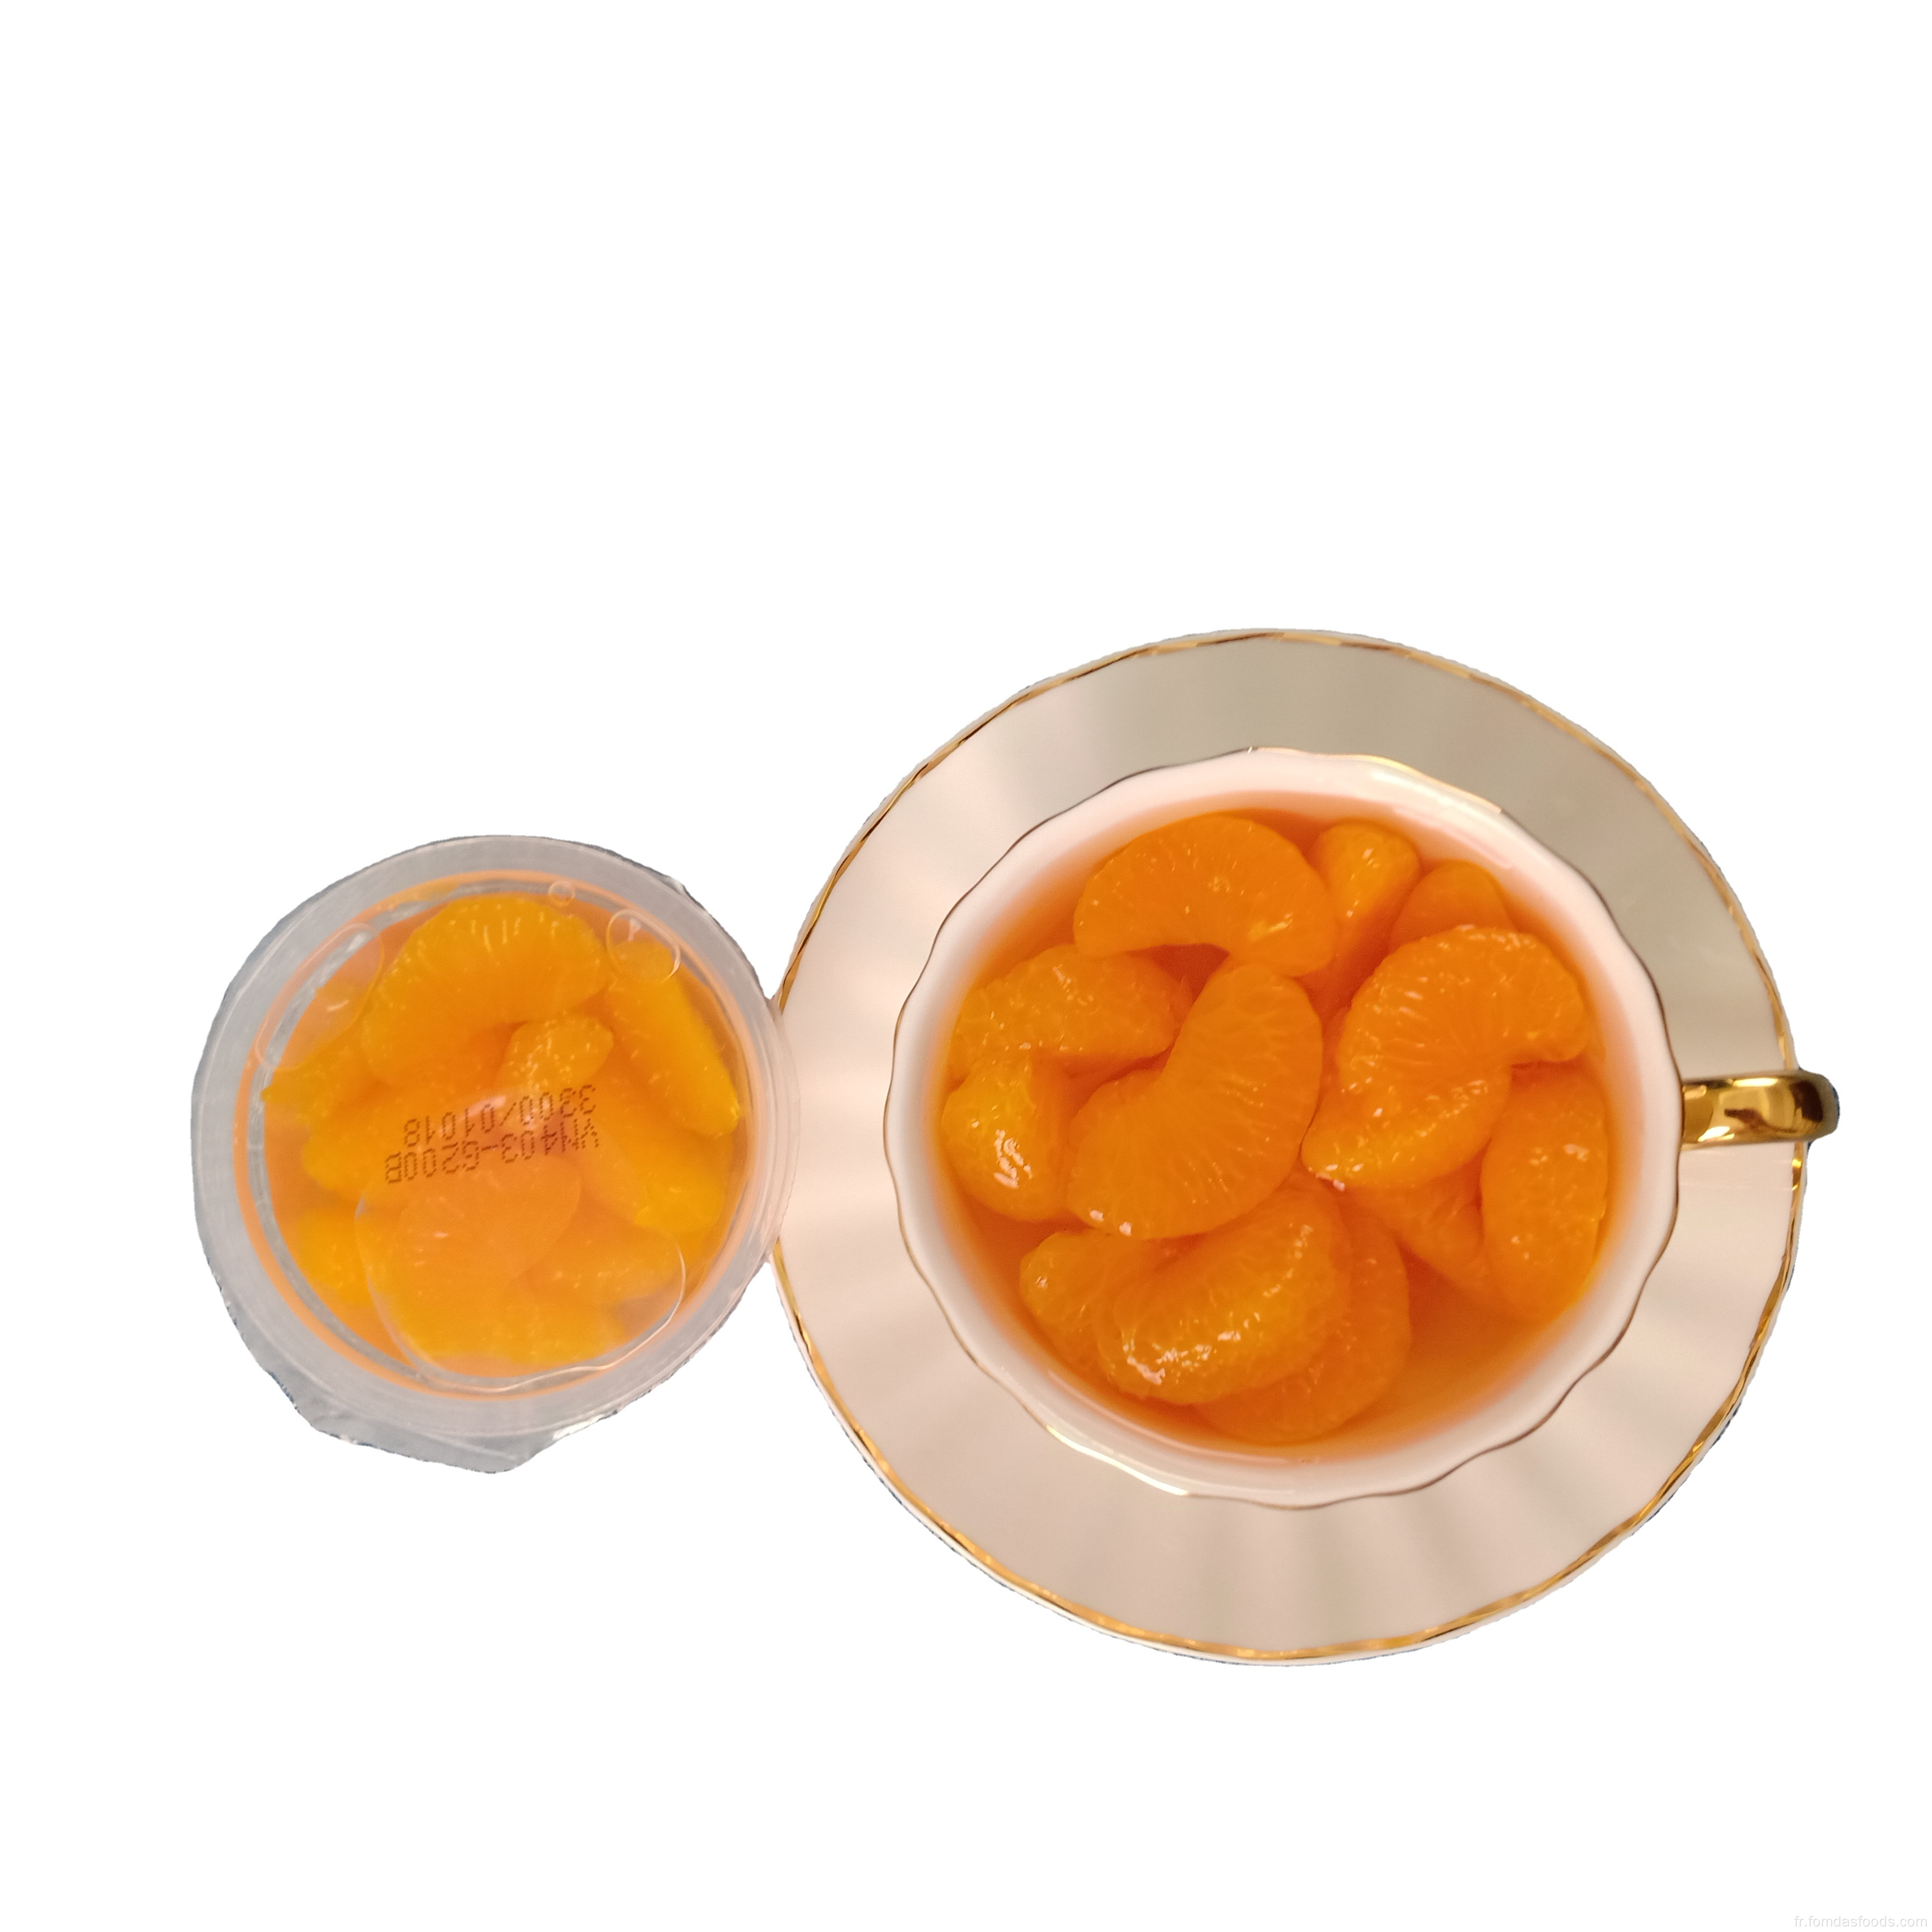 4 oz en conserve de mandarin orange en sirop de lumière